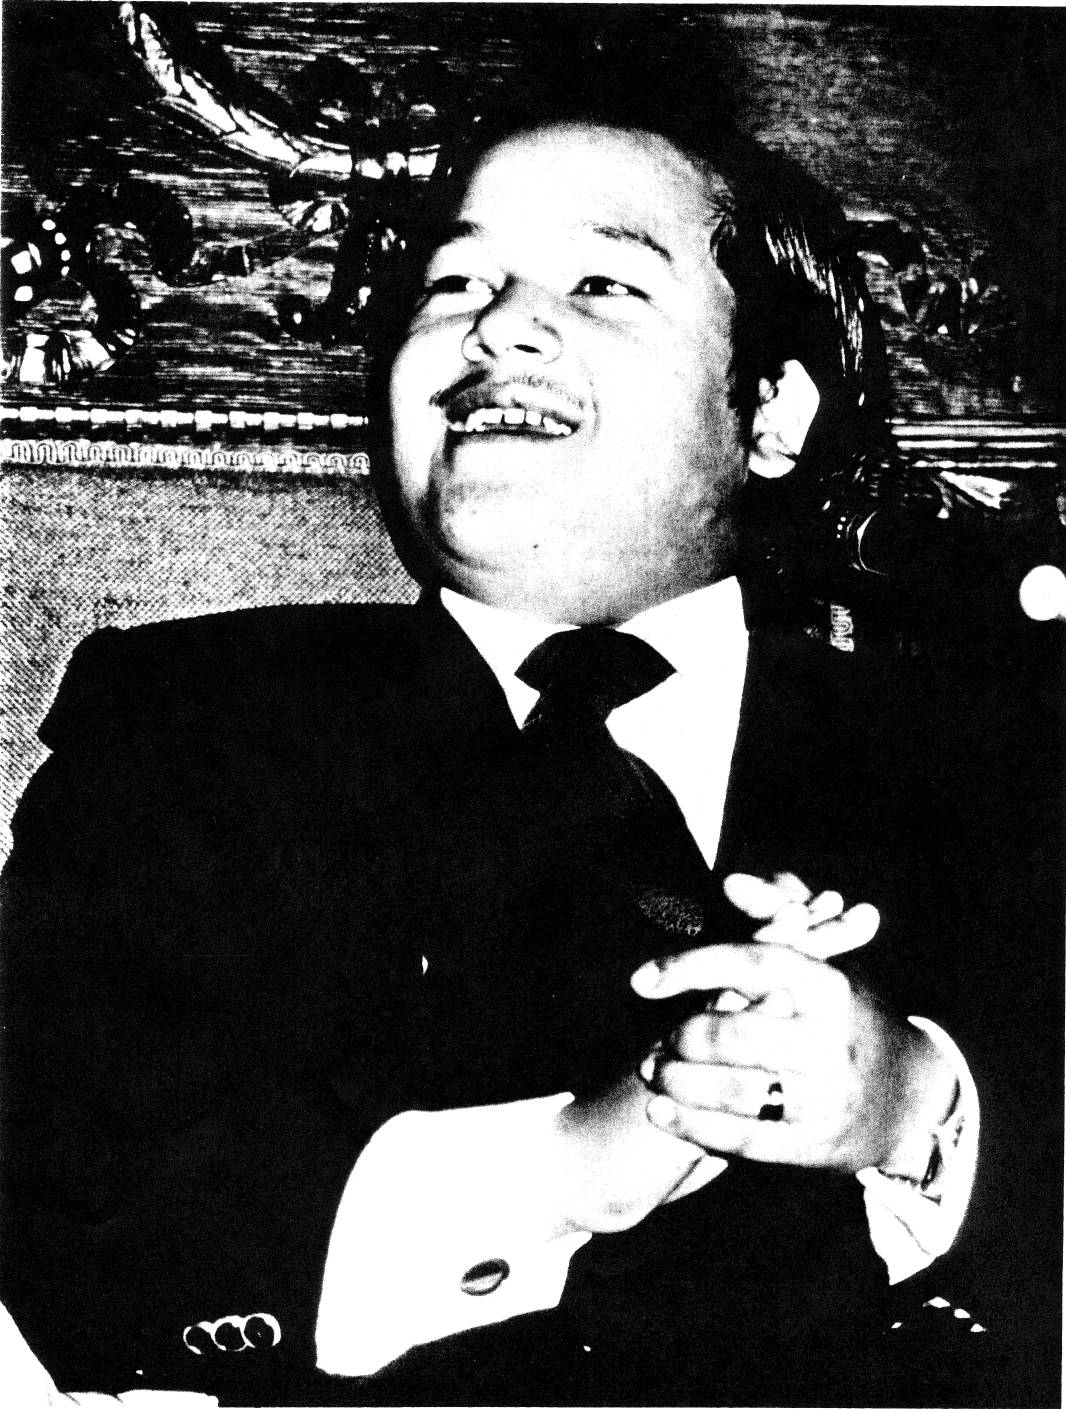 Prem Rawat Inspirational Speaker When He Was Guru Maharaj Ji, The Lord Of The Universe 1974